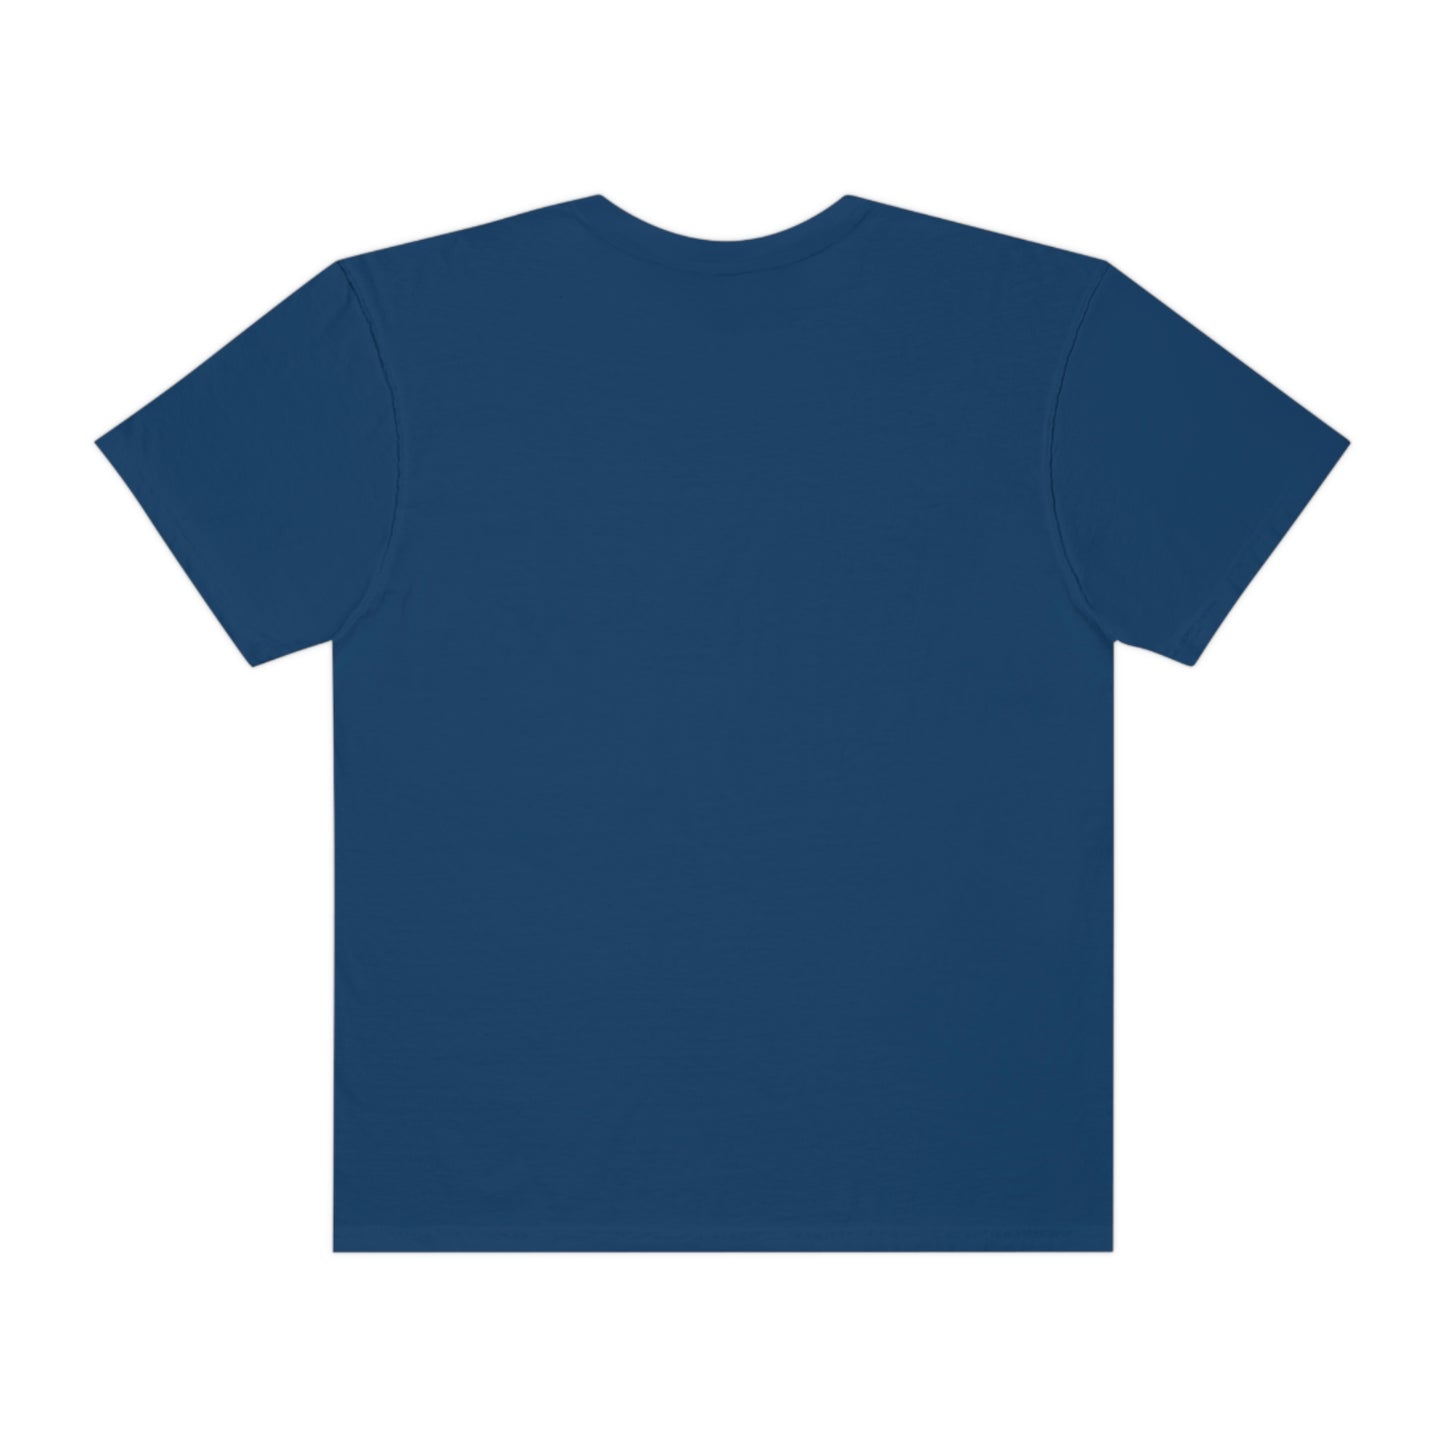 Alpine IQ Logo Short Sleeve T-Shirt - Heavy Weight